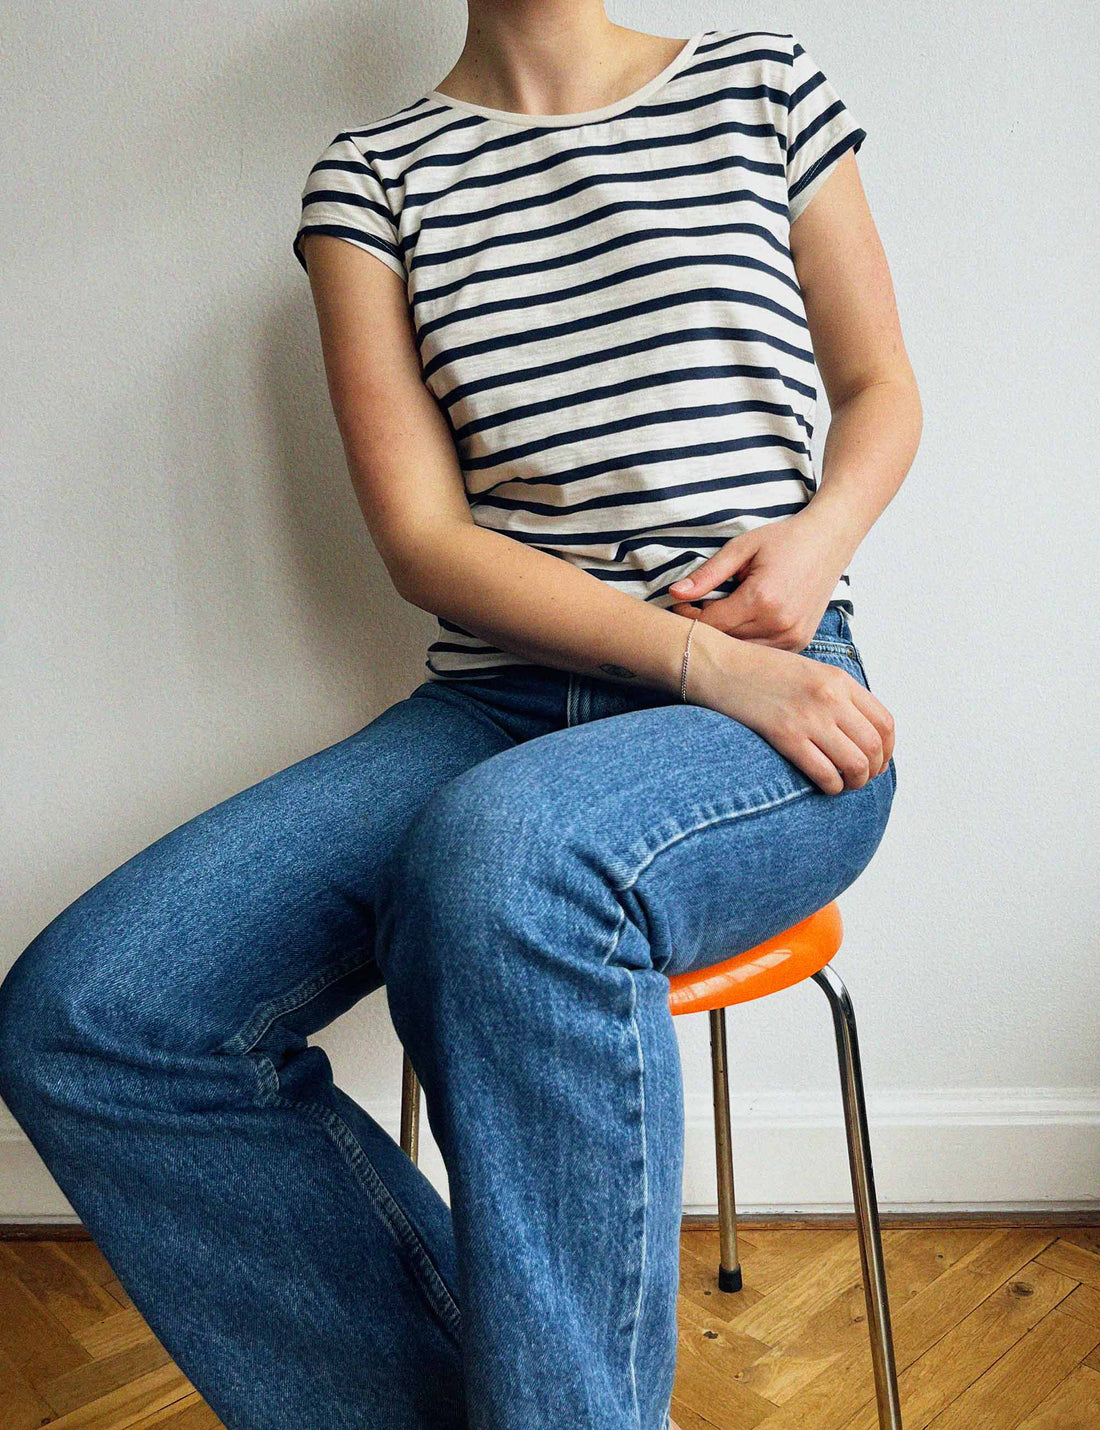 Liu short sleeve t-shirt navy/cream stripe